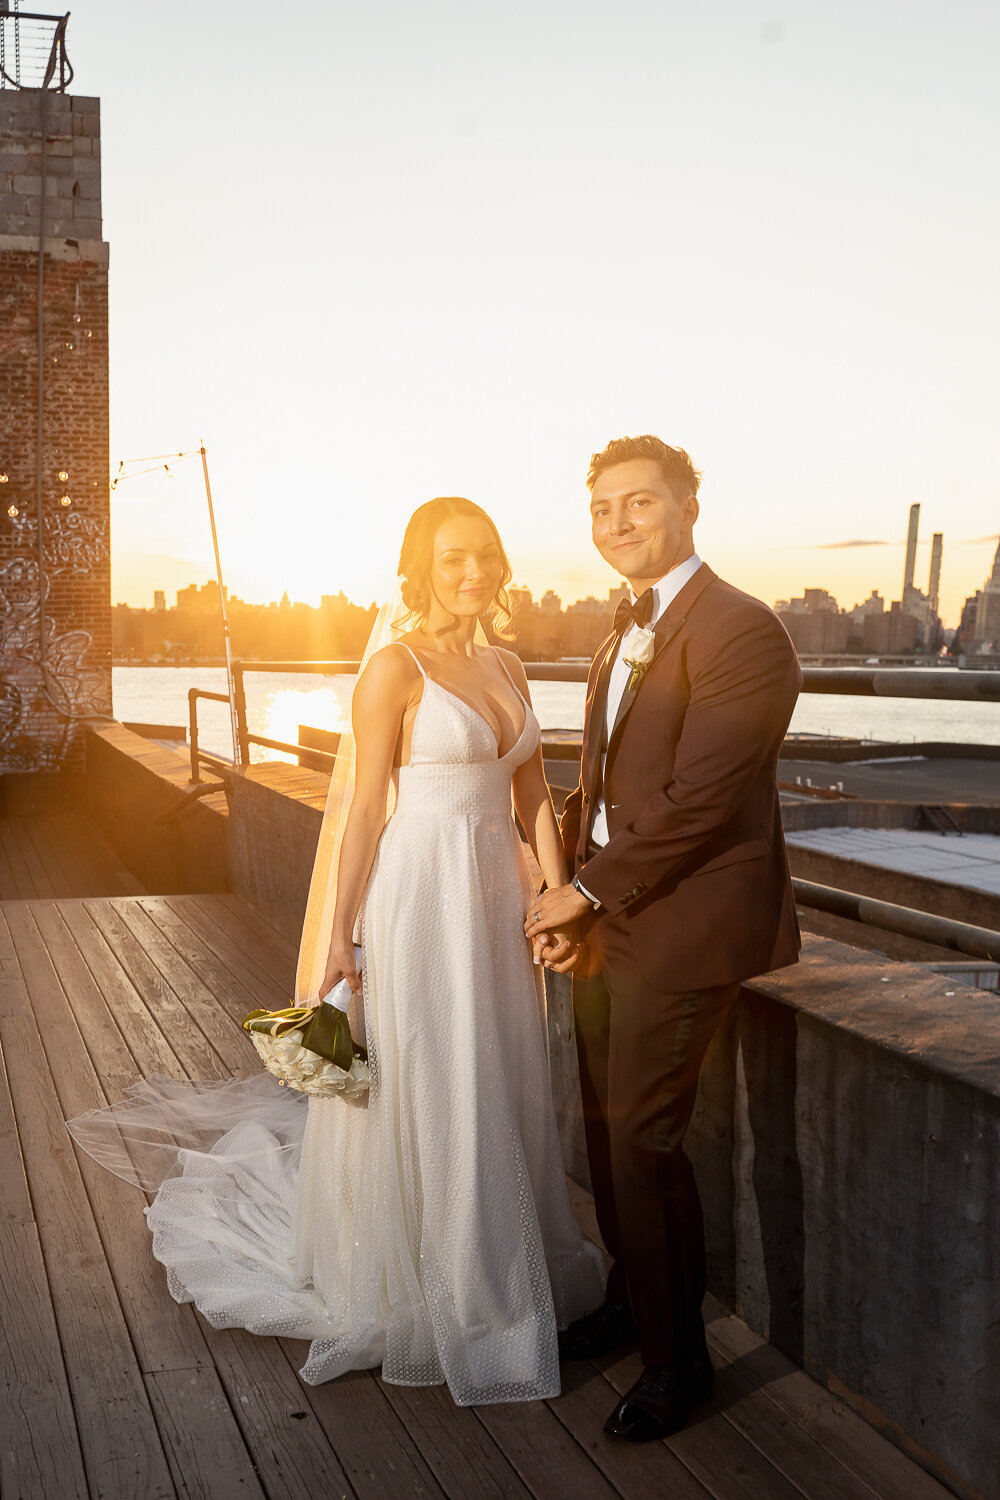 Greenpoint-lofts-brooklyn-newyork-rustic-wedding-25.jpg